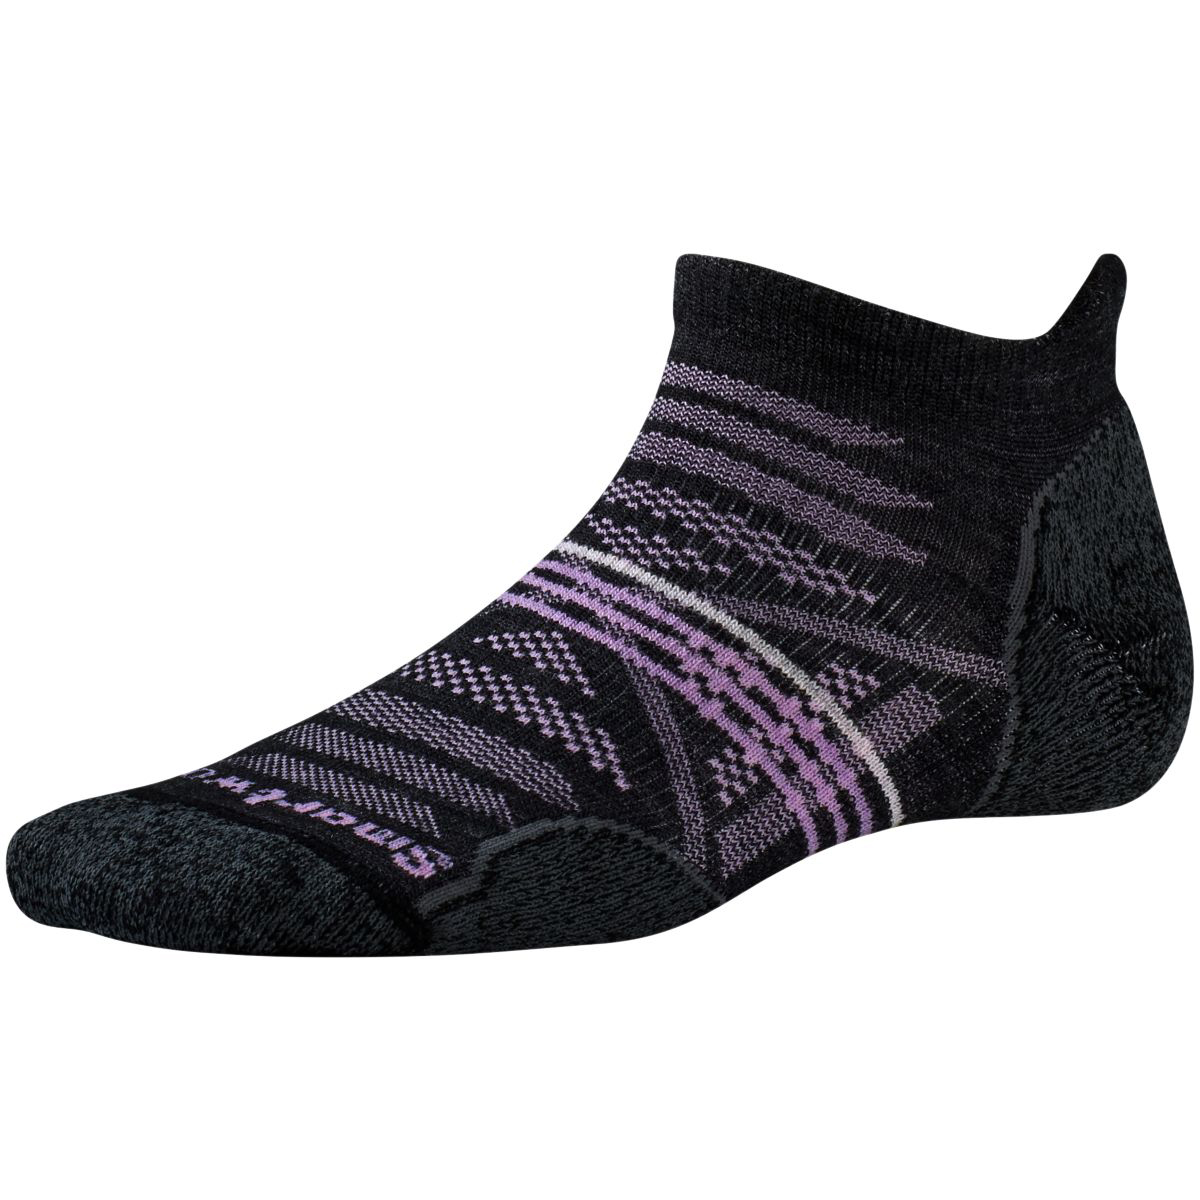 Smartwool Women's Phd Outdoor Light Micro Socks - Black, S